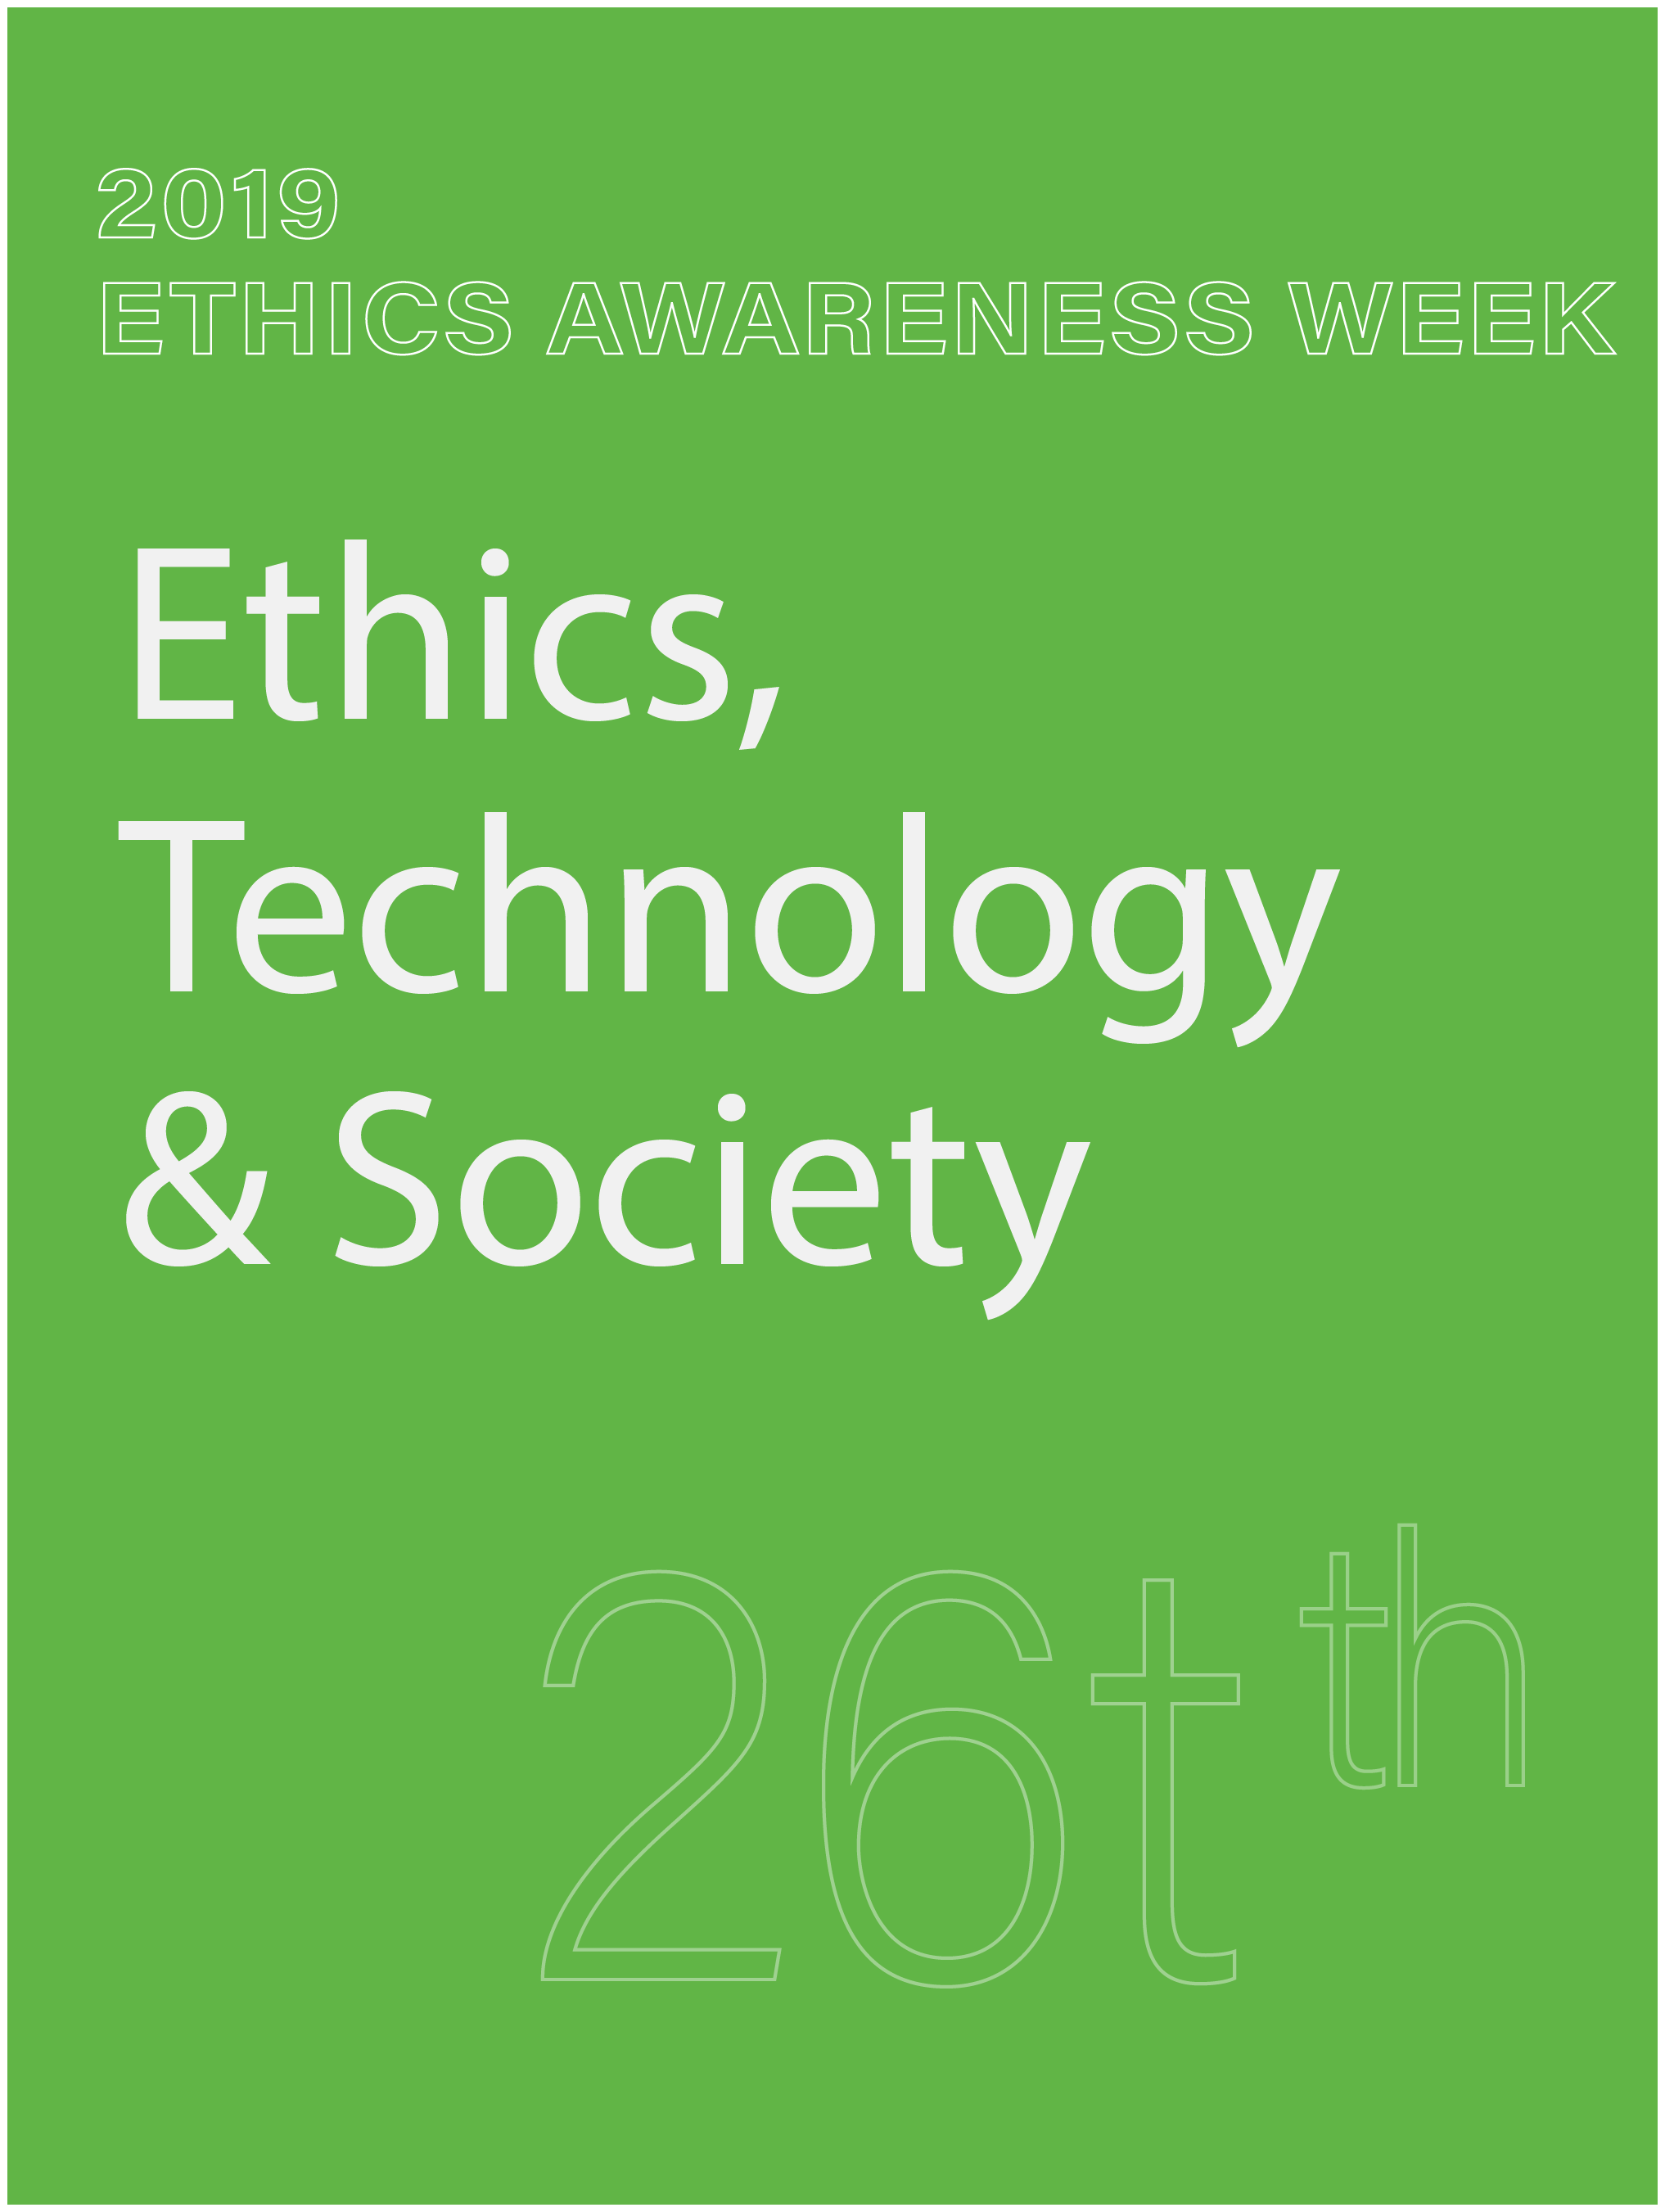 Ethics Week 2019 Poster